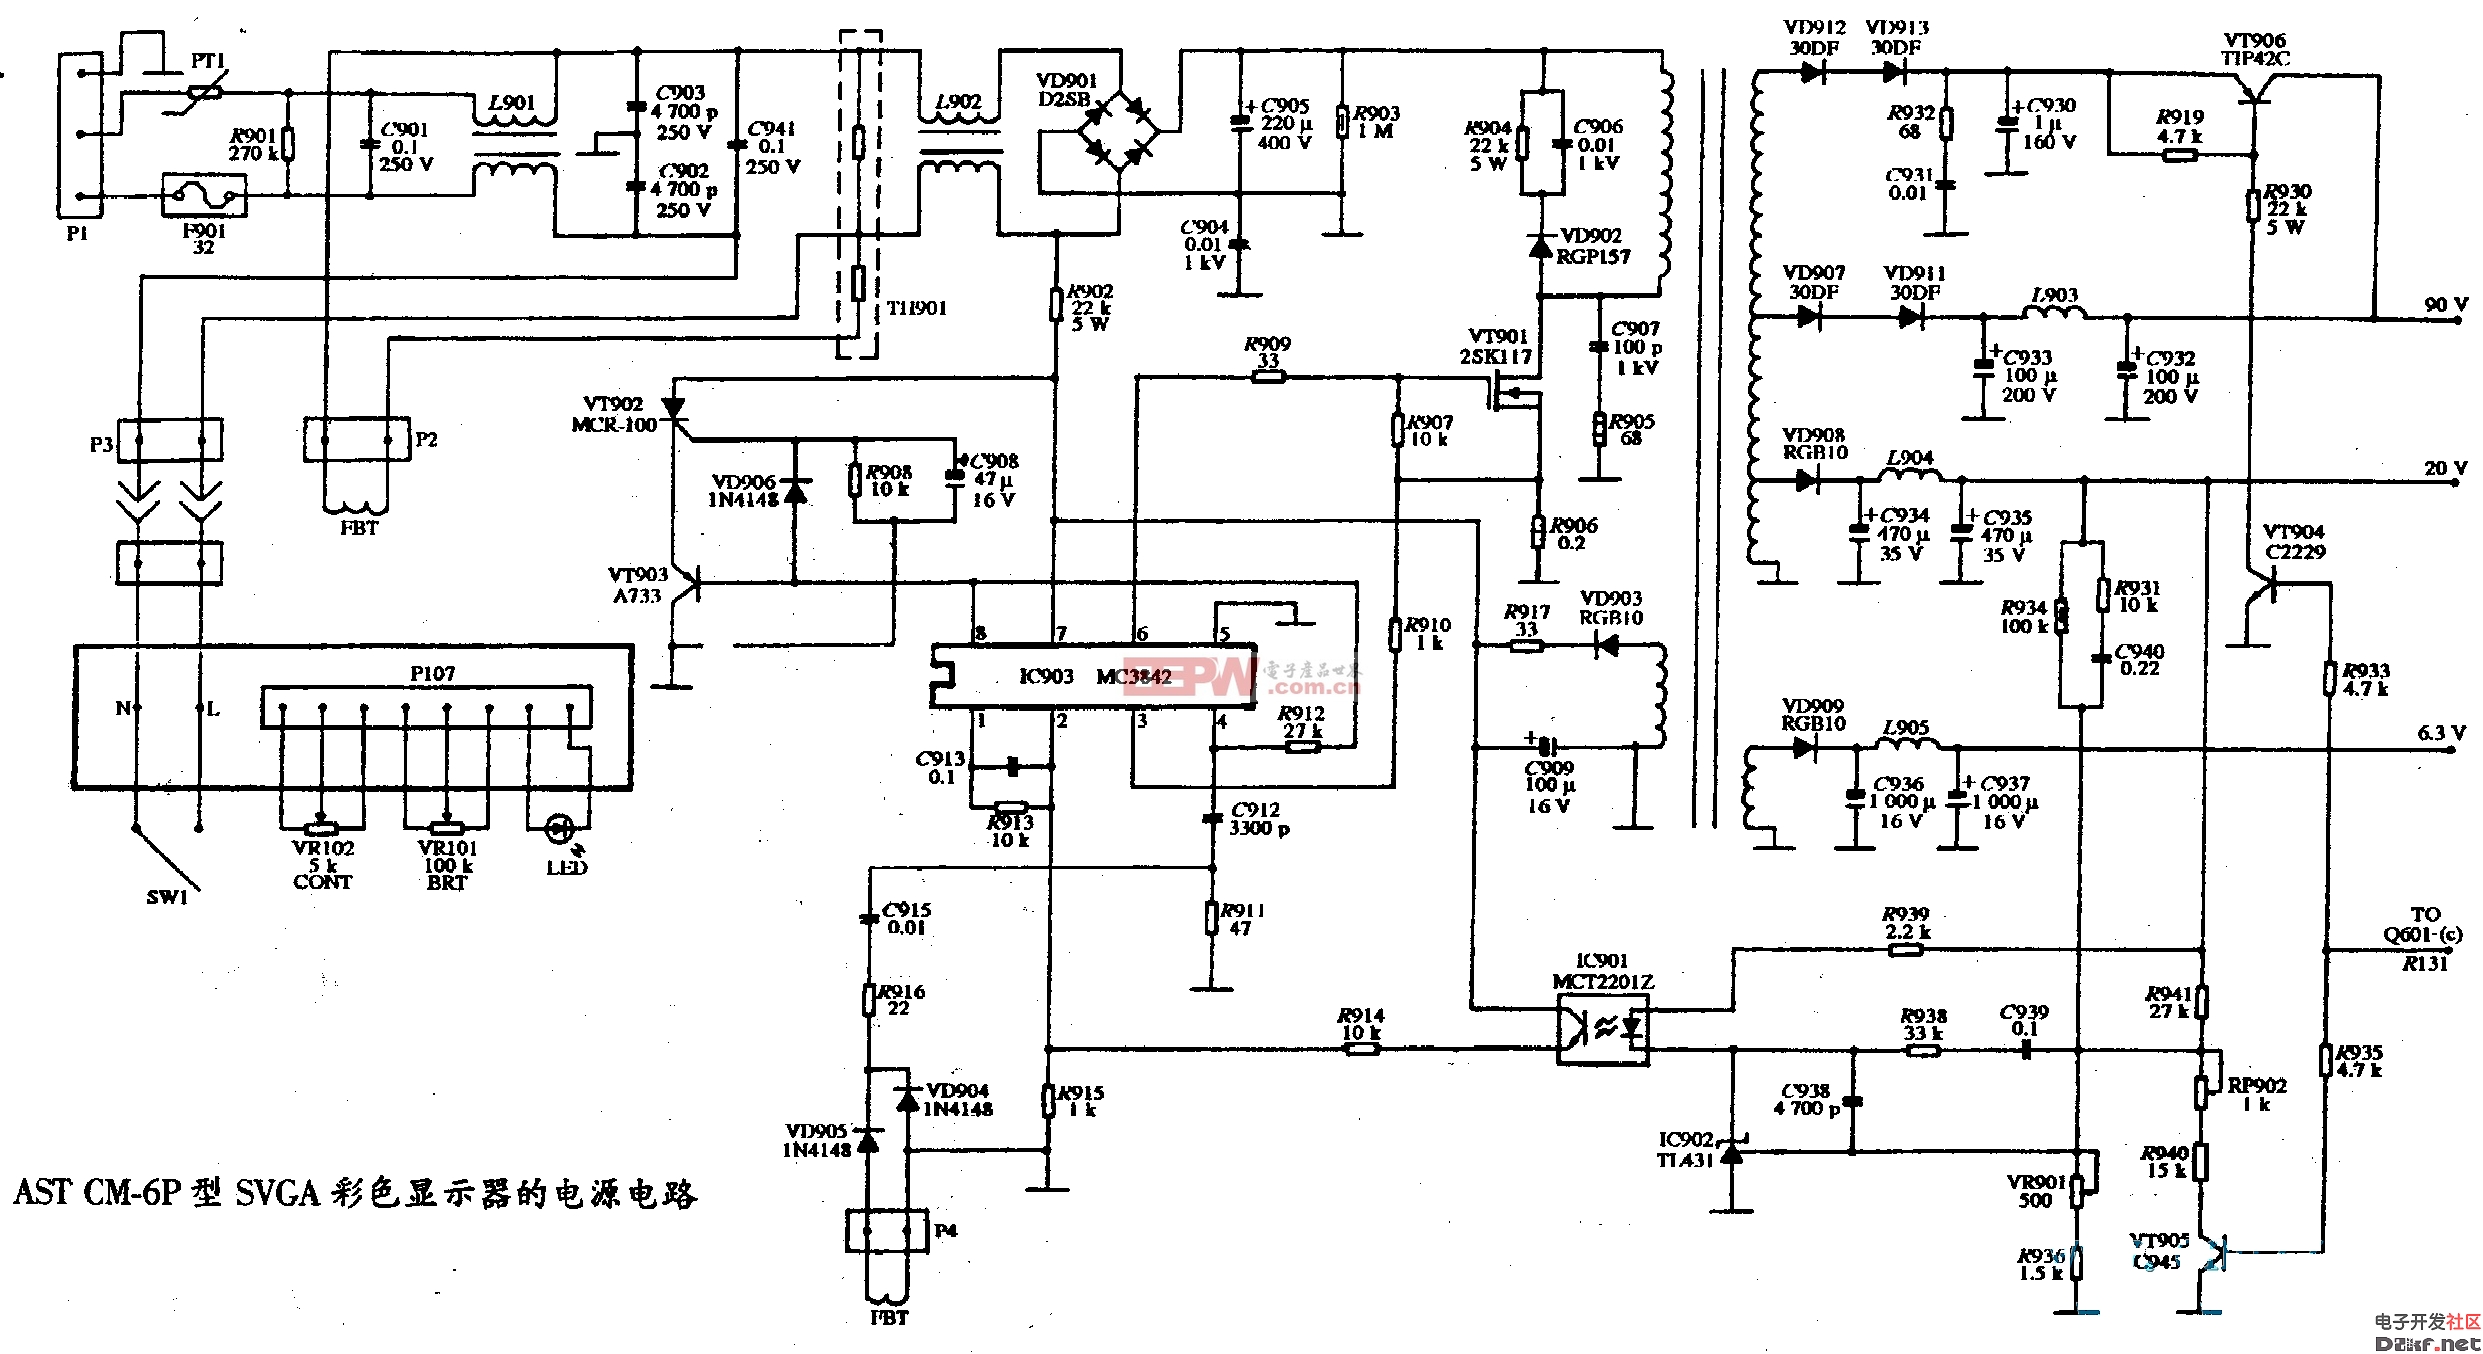 AST CM-6P型SVGA彩色显示器的电源电路图